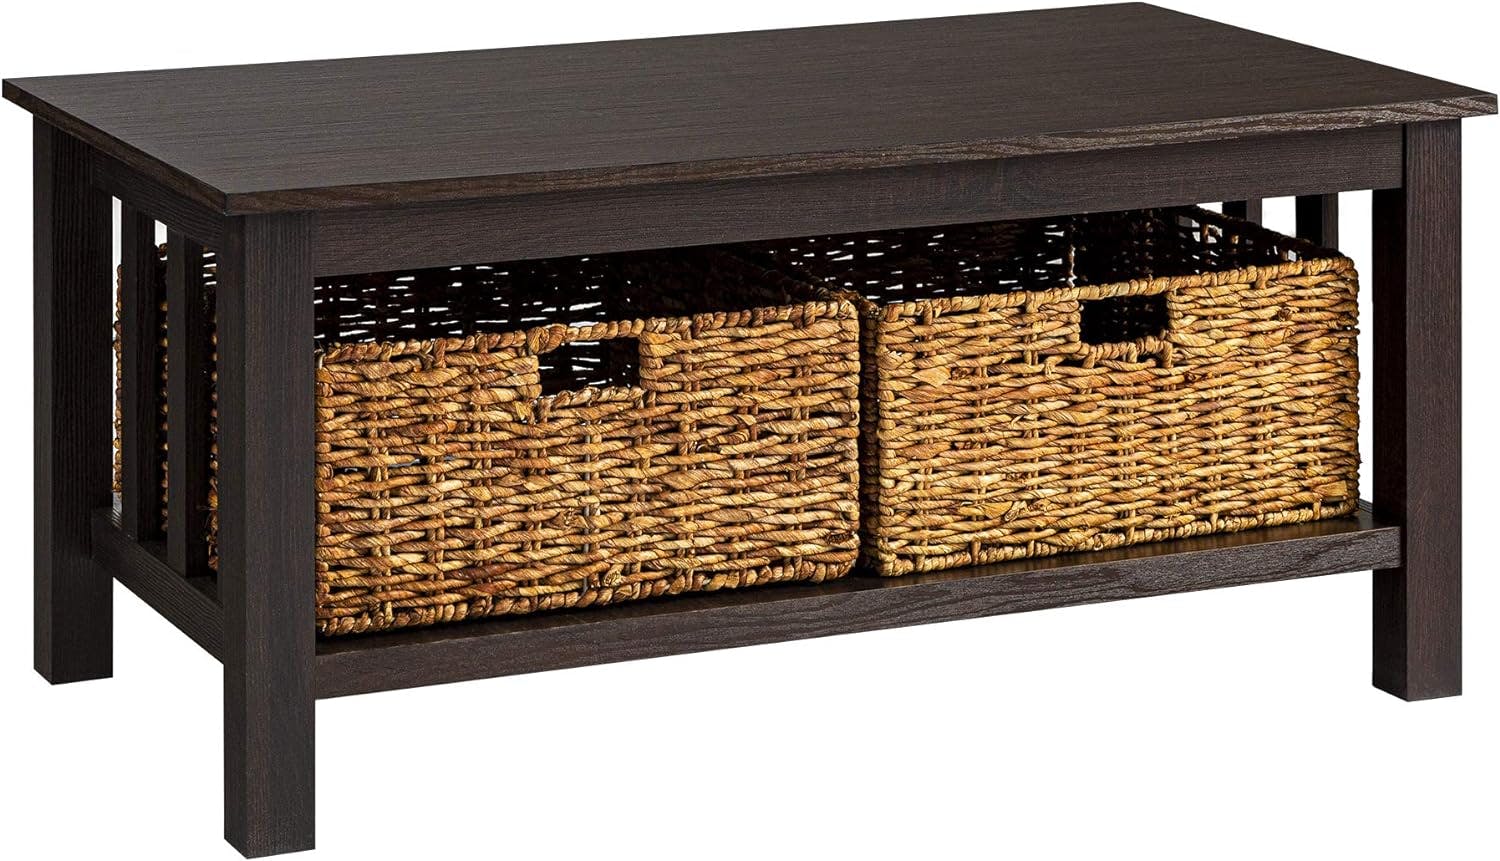 Espresso Elegance 40" Rectangular Coffee Table with Wicker Storage Baskets